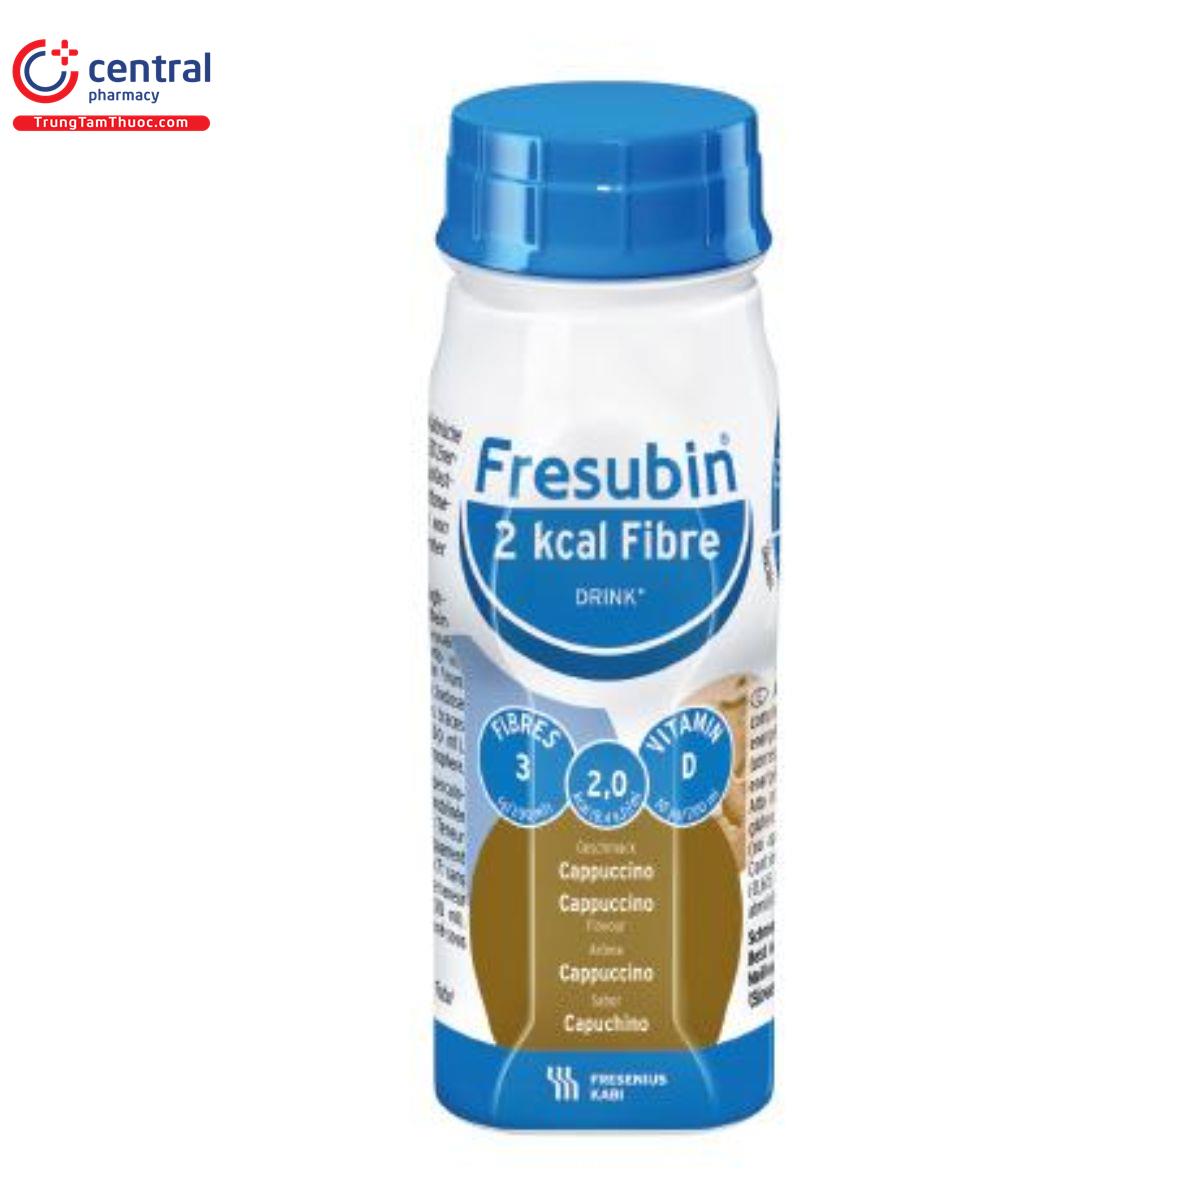 fresubin 2kcal fibre drink 8 R7516